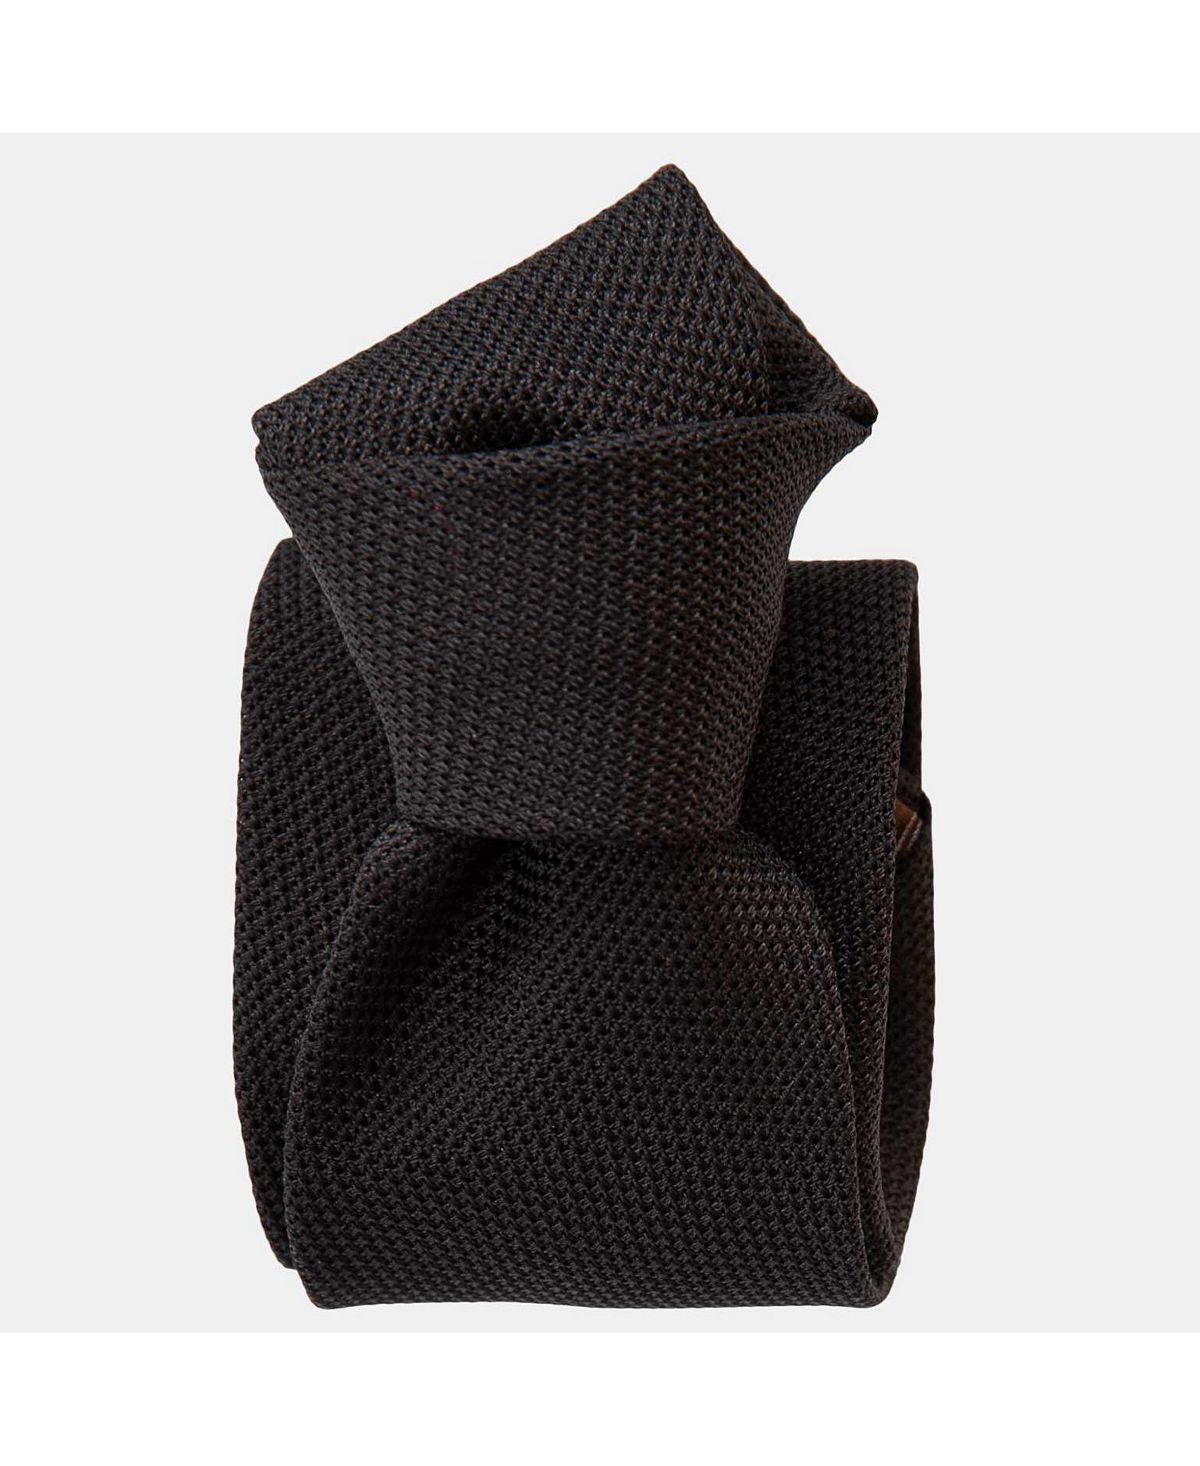 Nero - шелковый галстук гренадин для мужчин Elizabetta foresta удлиненный шелковый галстук гренадин для мужчин elizabetta